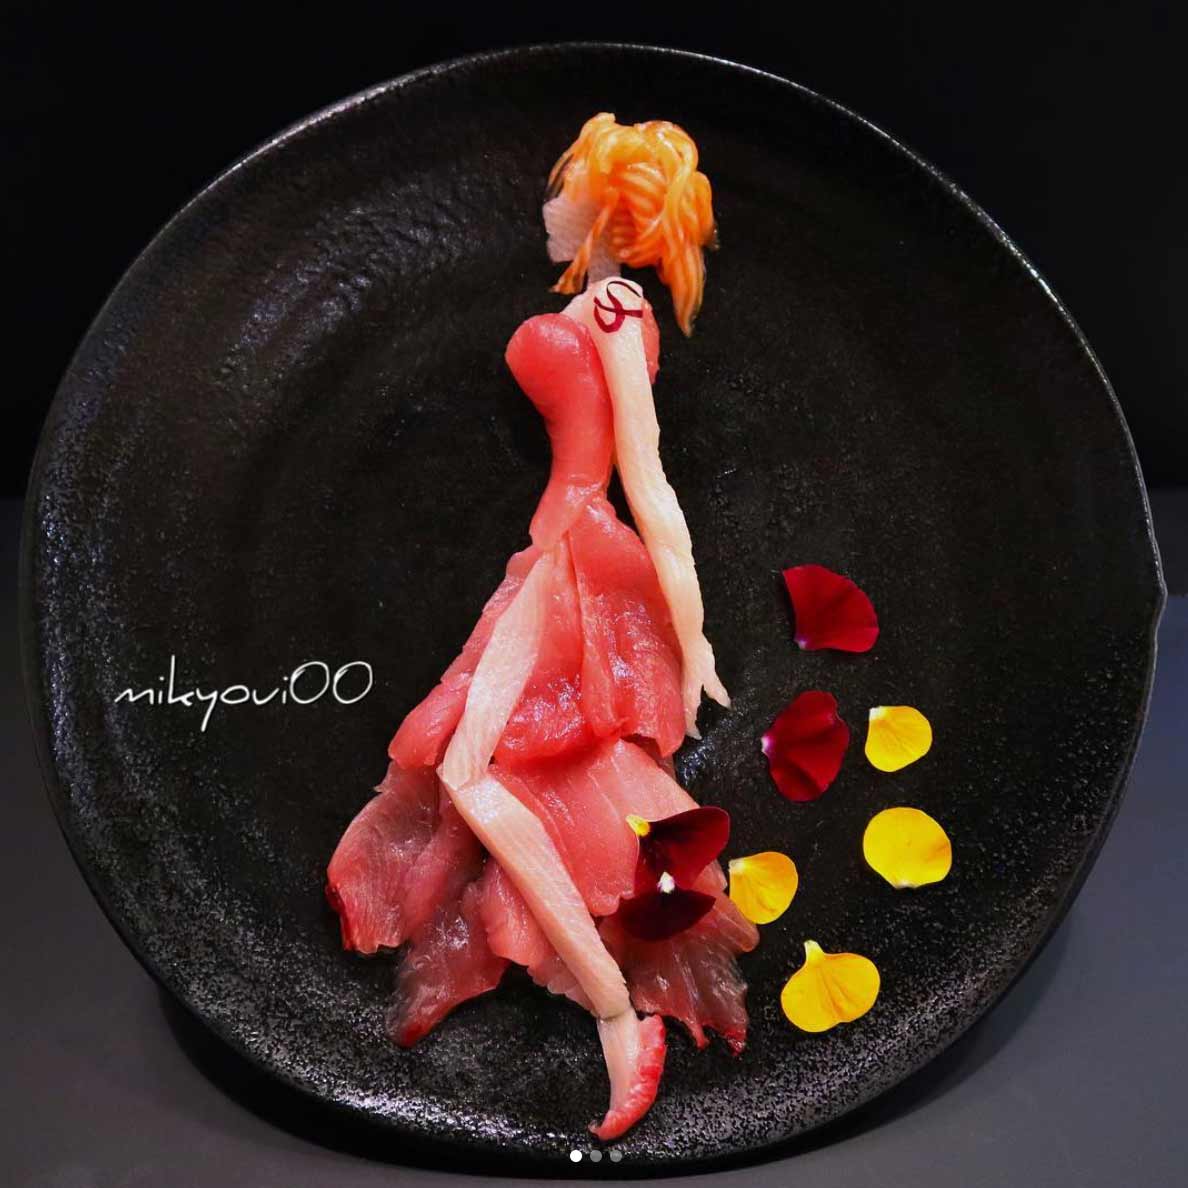 Wundervolle Sashimi-Kunstwerke von mikyou mikyou-sashimi-art-sushi-fischbilder_14 